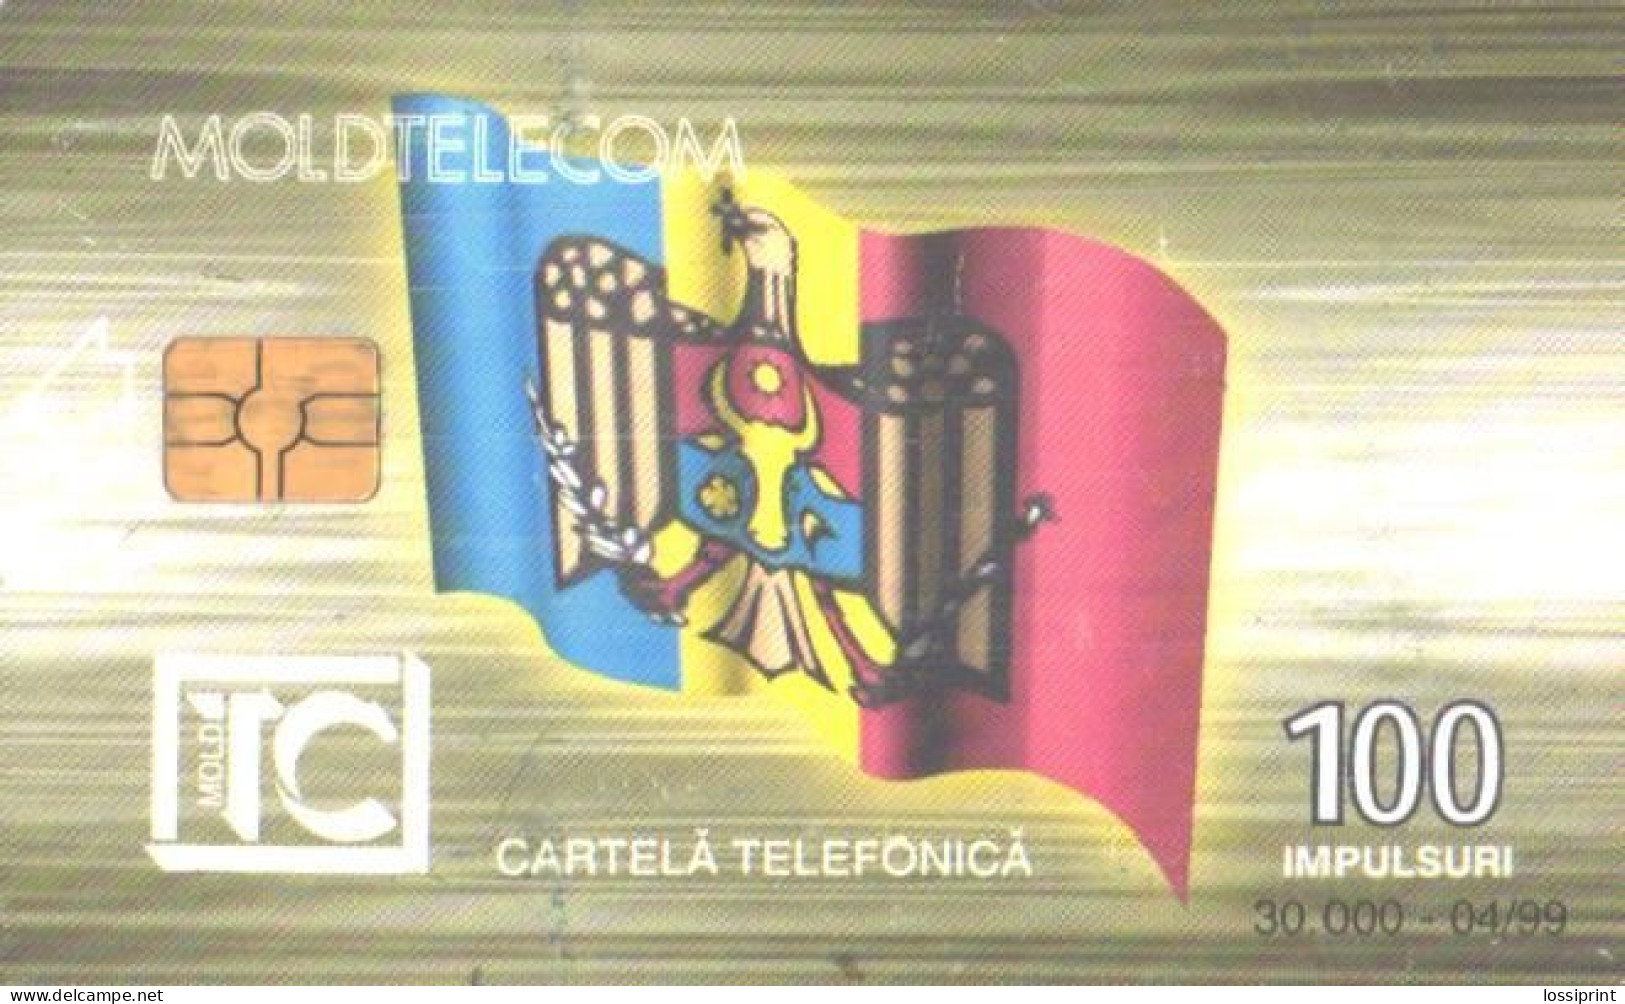 Moldova:Used Phonecard, Moldtelecom, 100 Impulses, Triumph Arch, 1999 - Moldavia